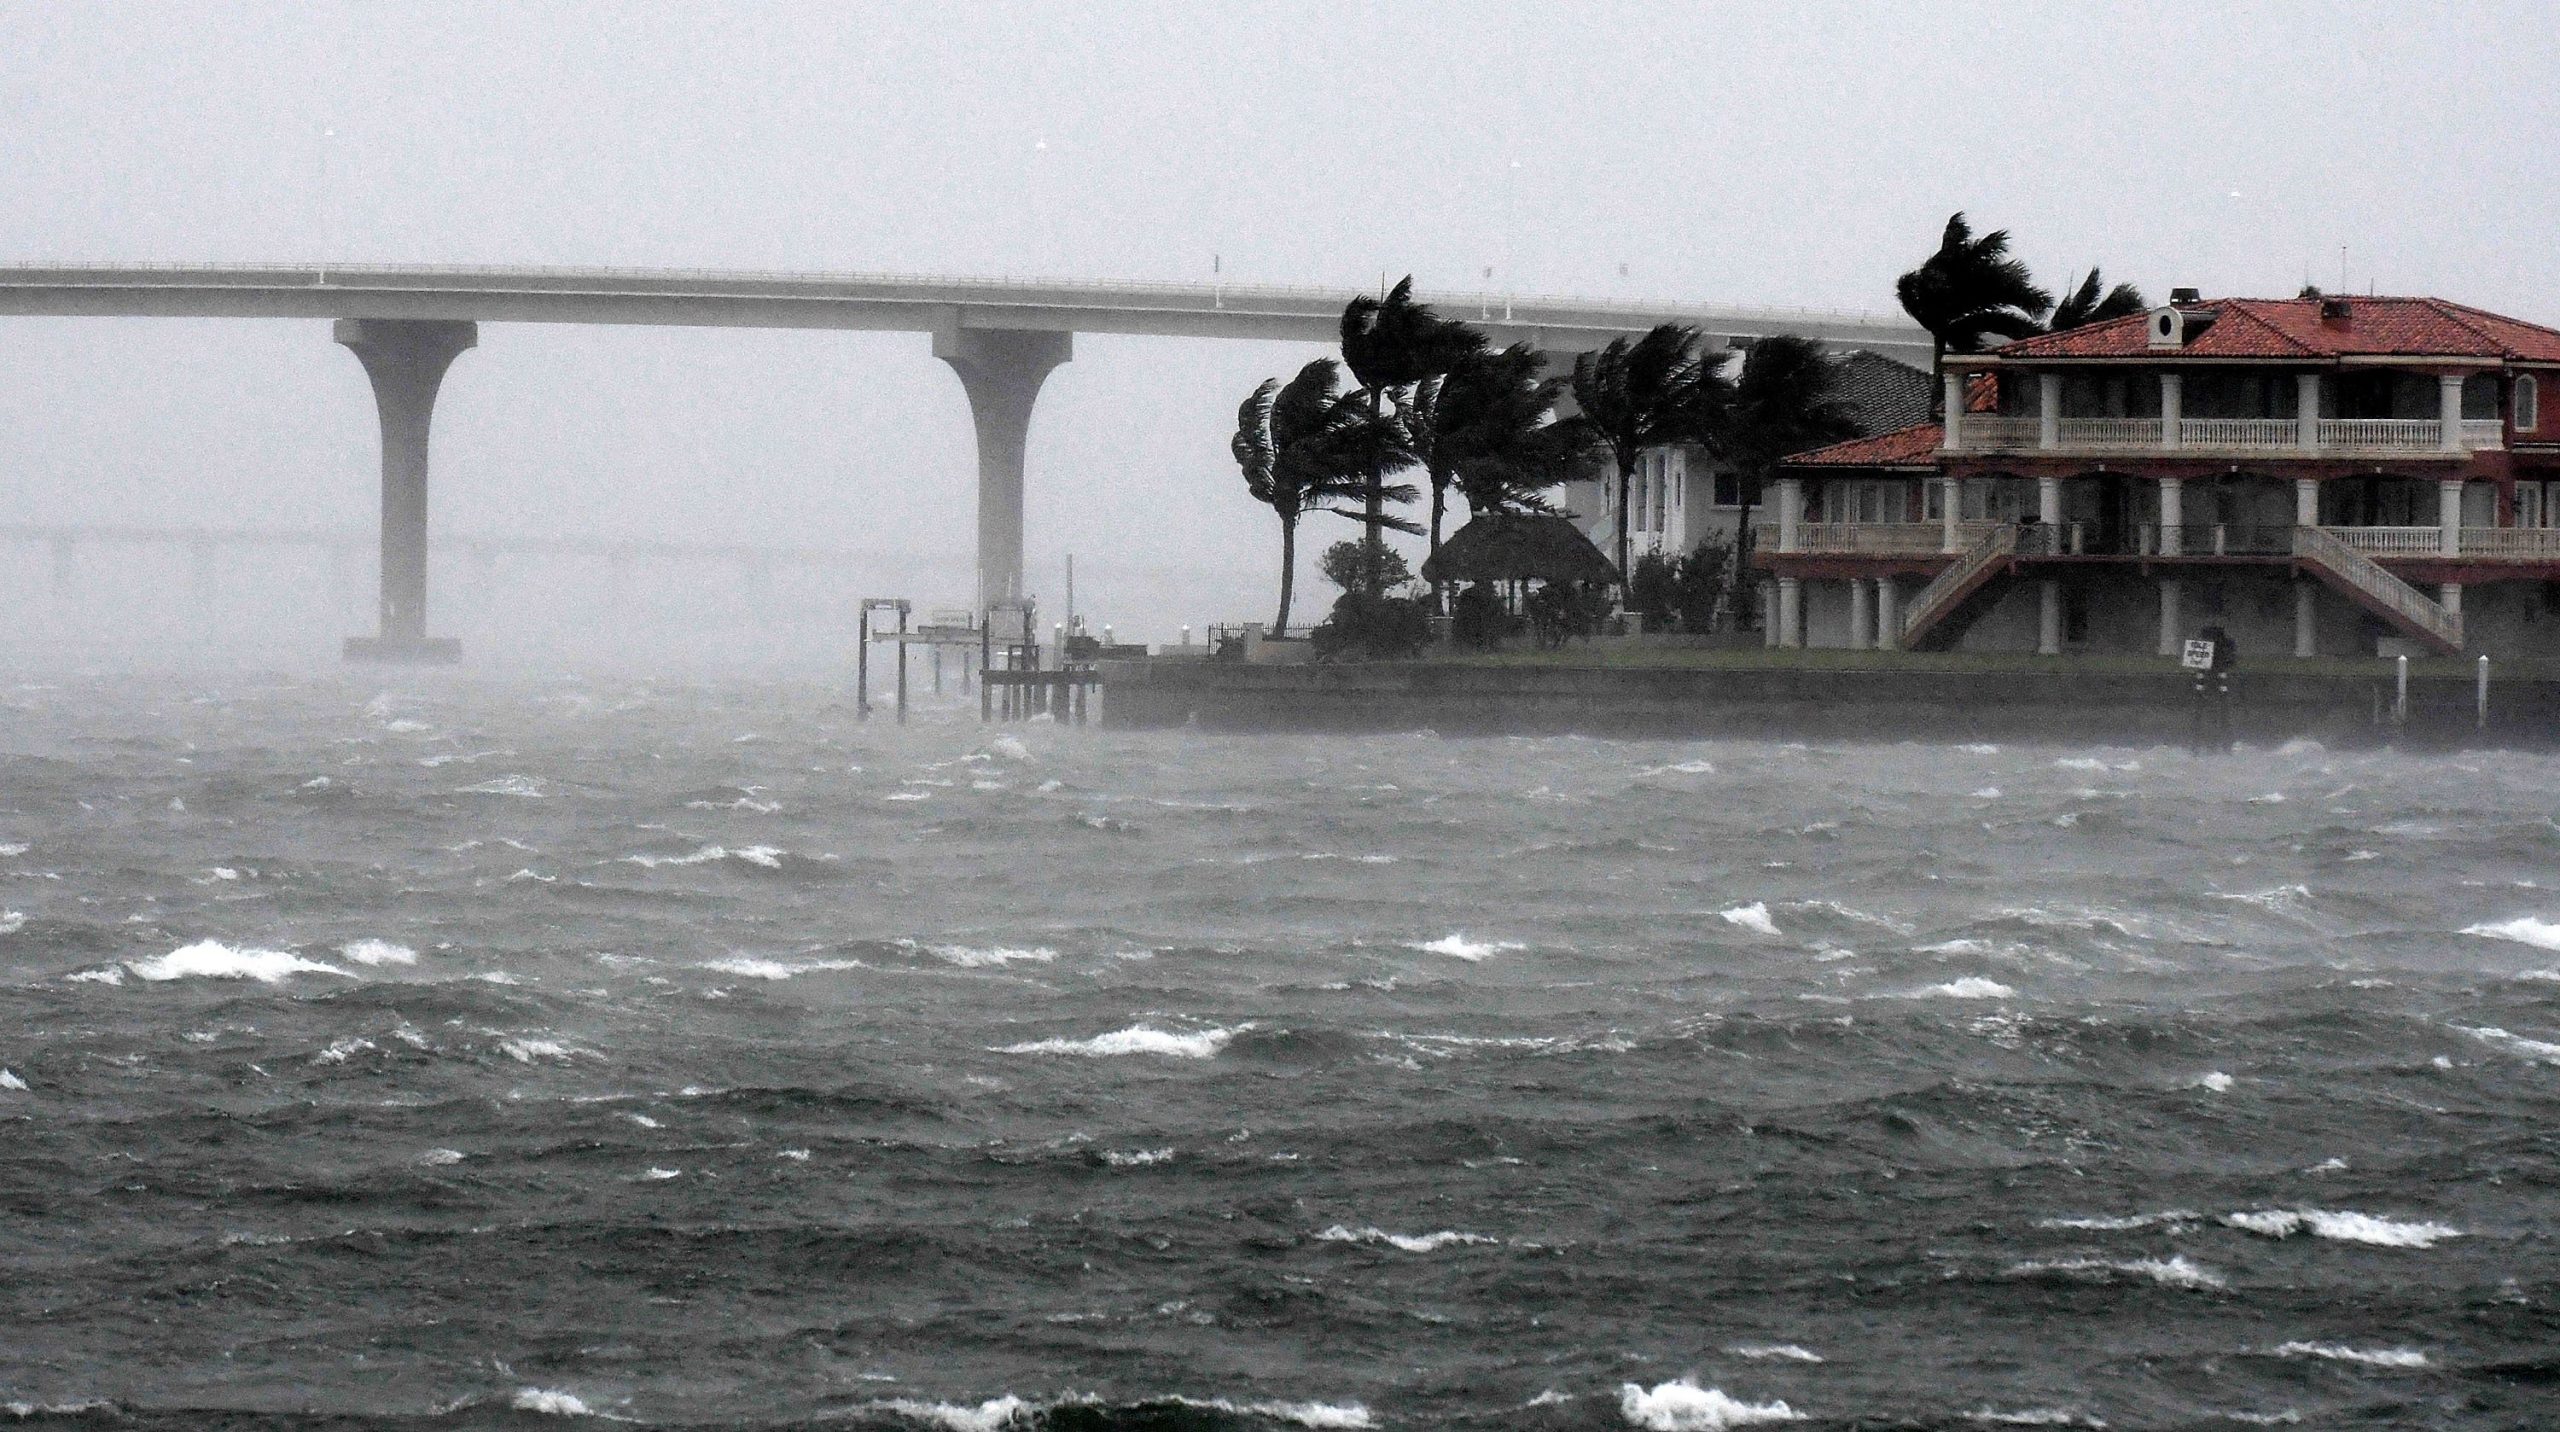 See Hurricane Ian videos showing the devastating Florida landfall